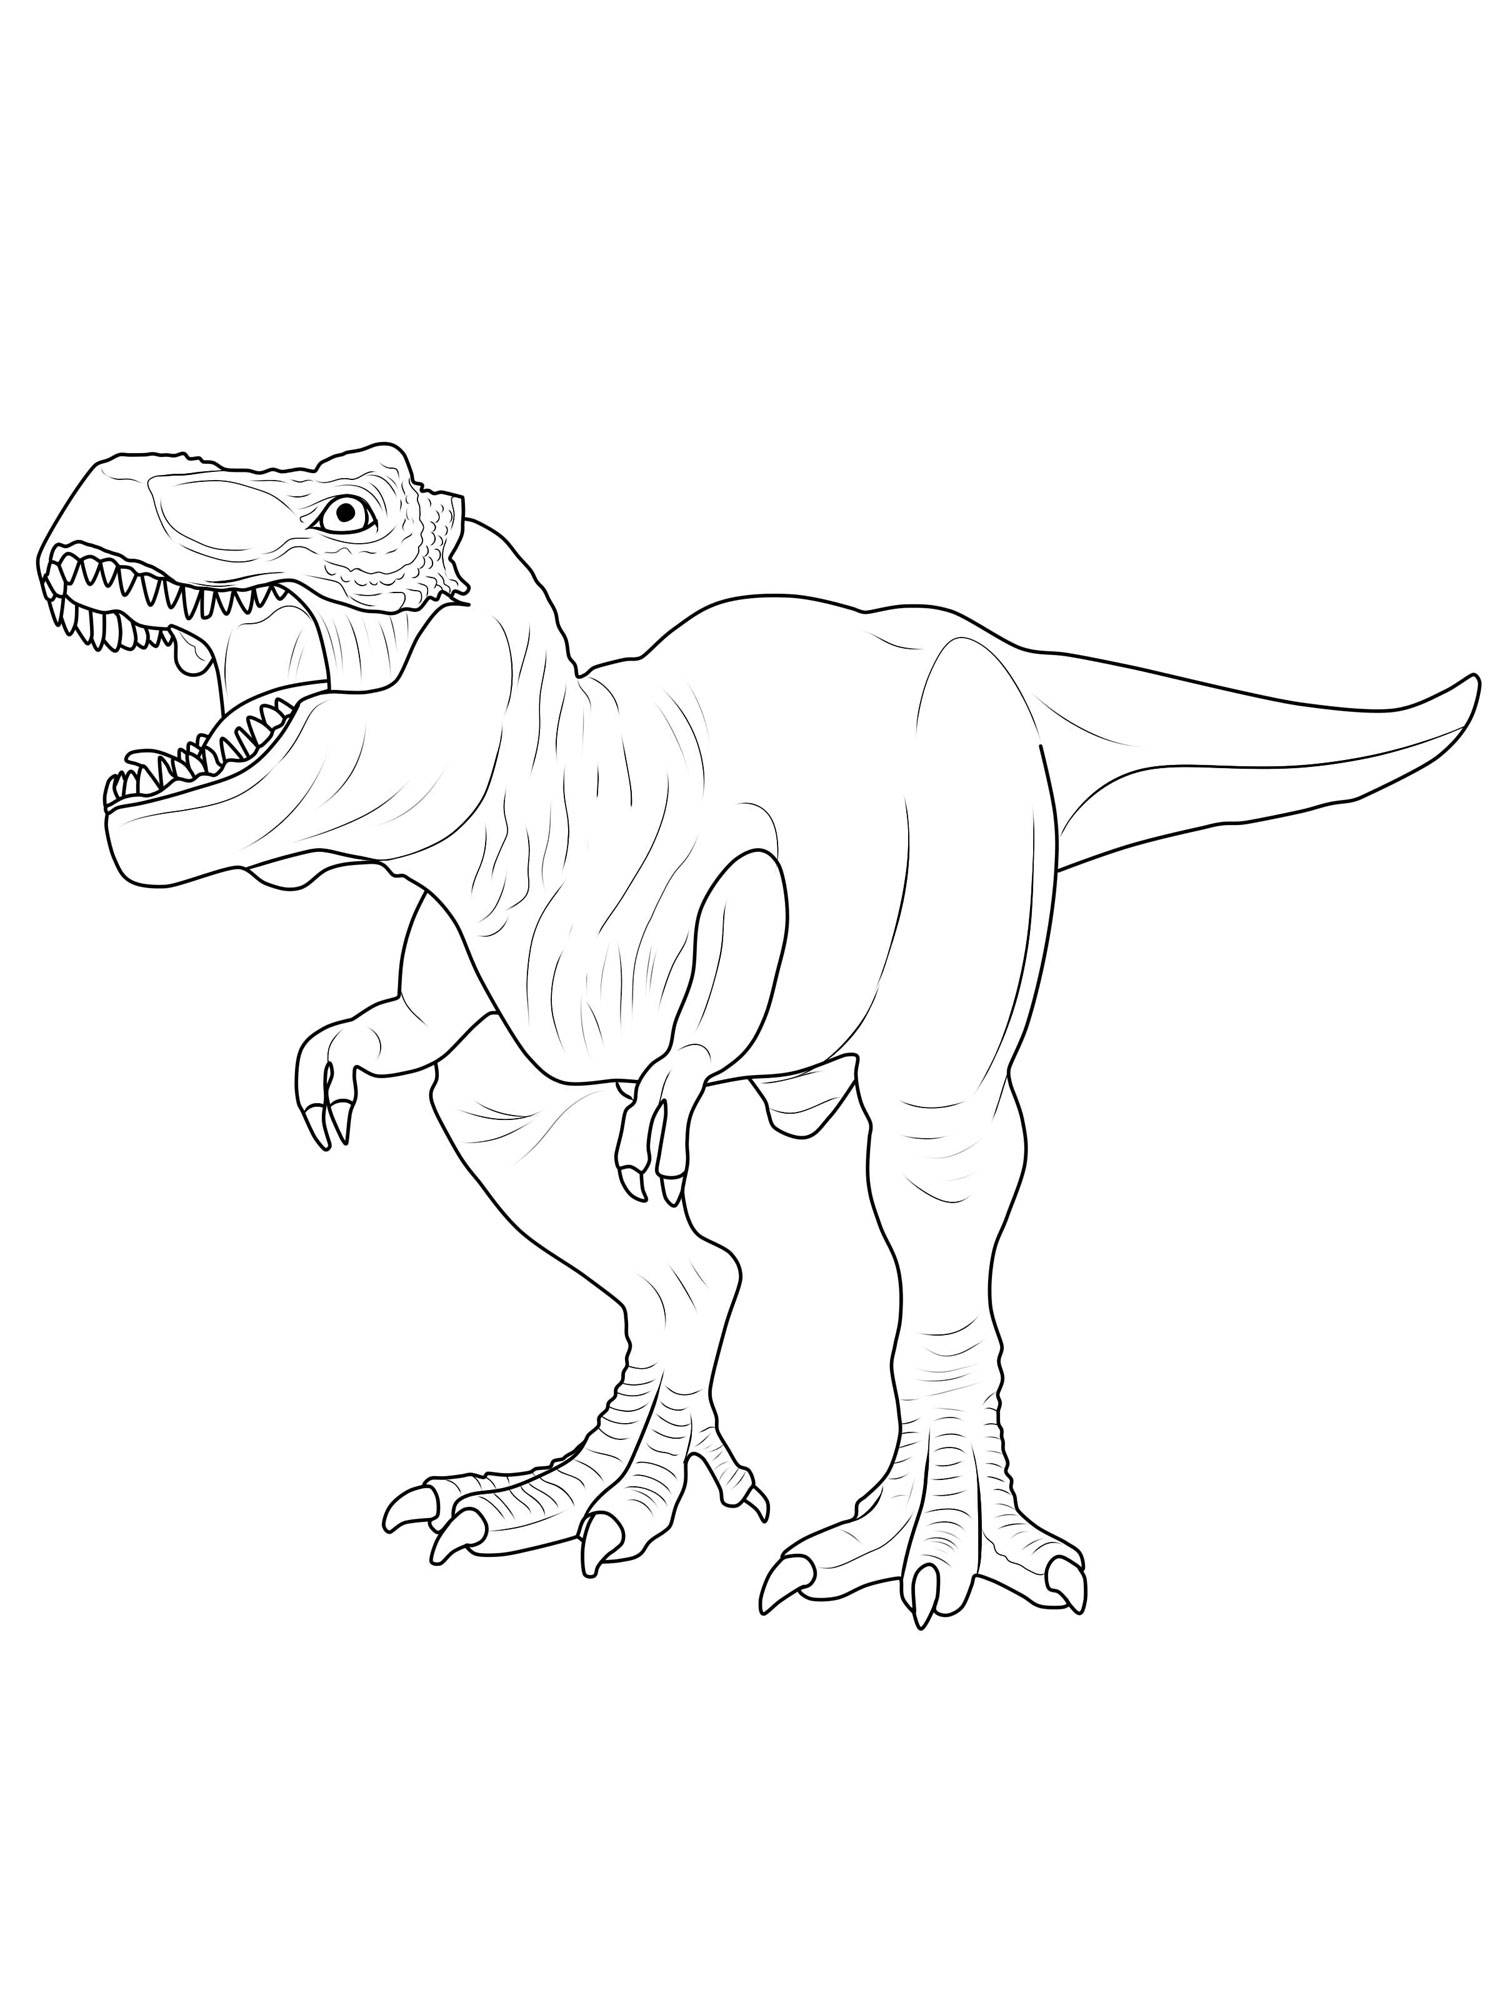 t-rex-skull-drawing-at-getdrawings-free-download